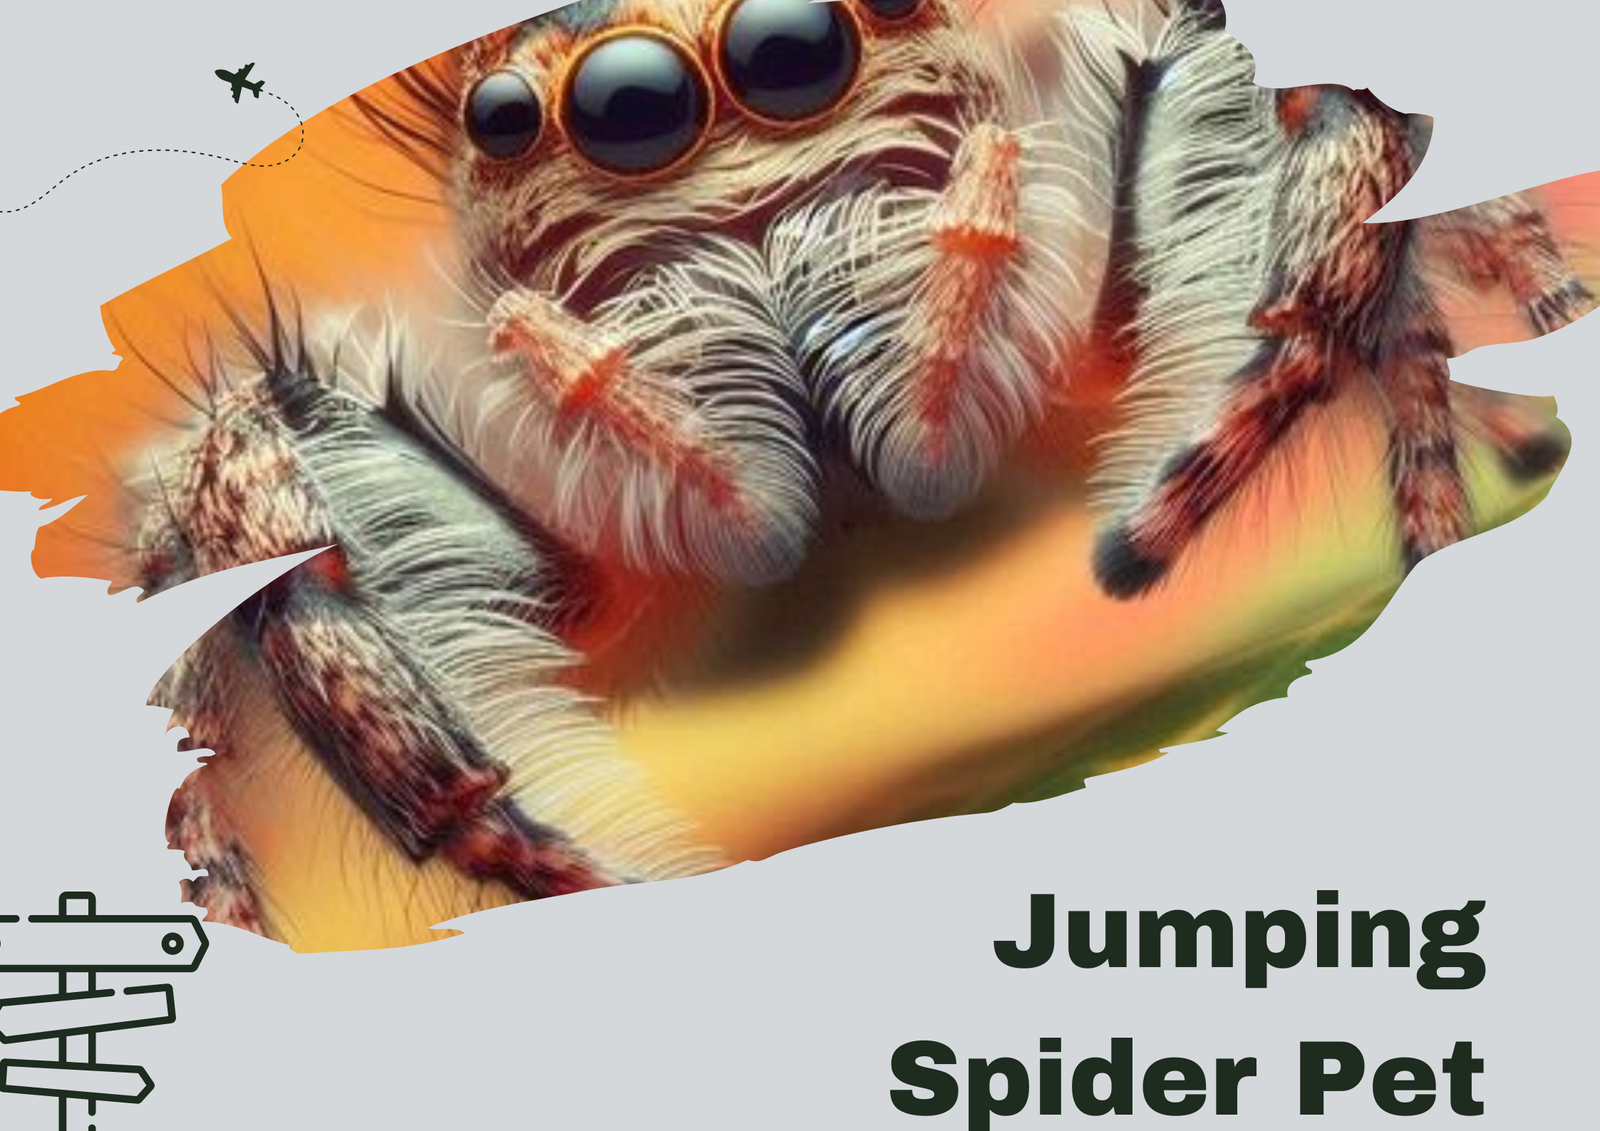 Jumping Spider Pet